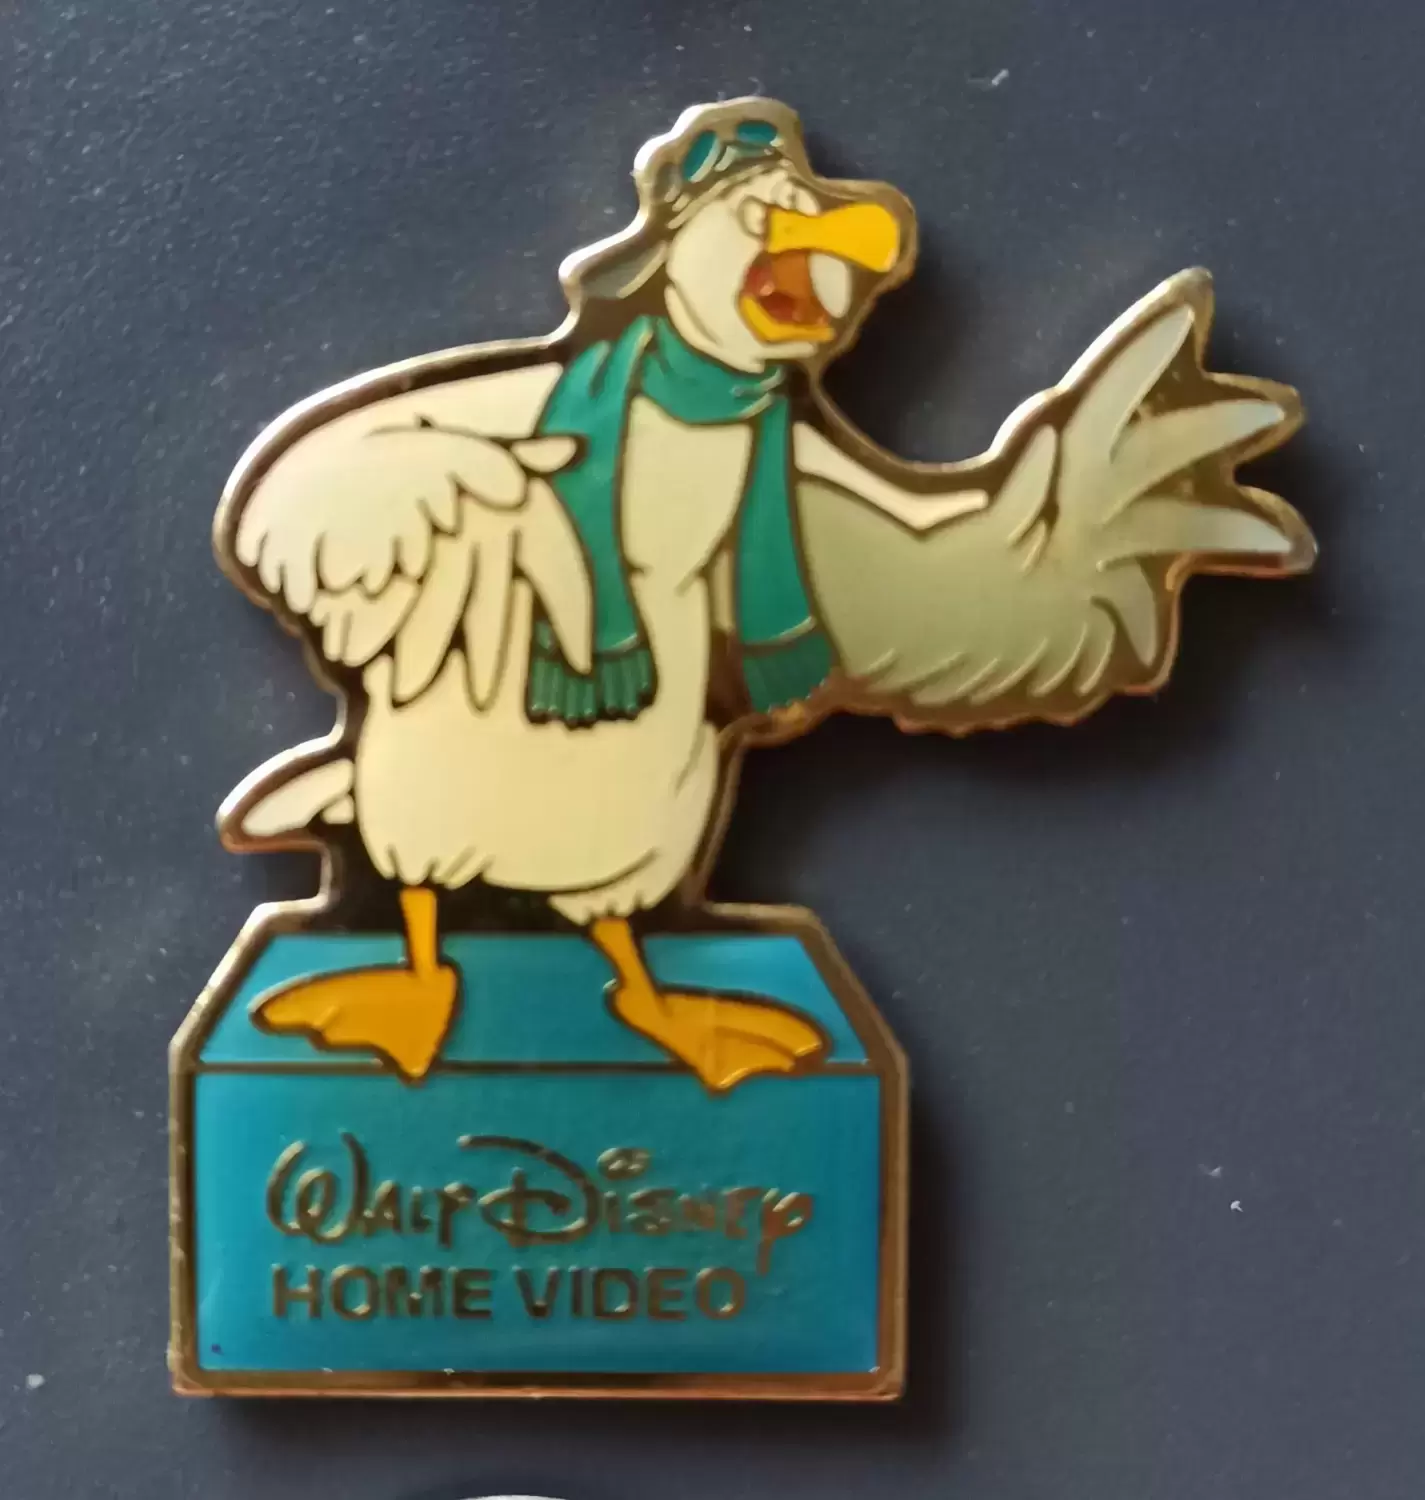 Walt Disney Home Vidéo - Wilbur